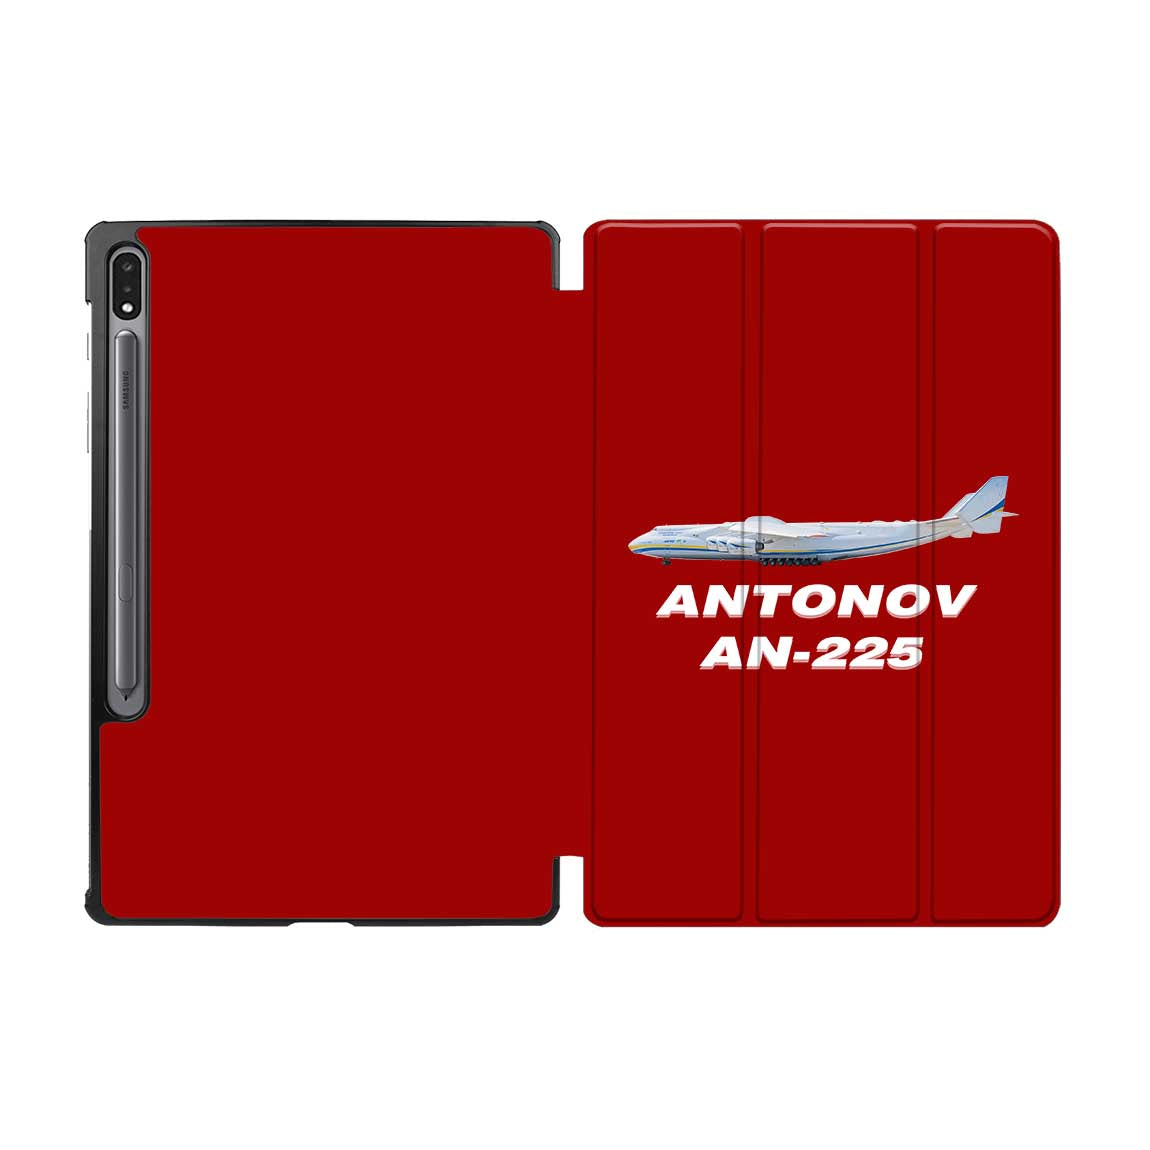 The Antonov AN-225 Designed Samsung Tablet Cases